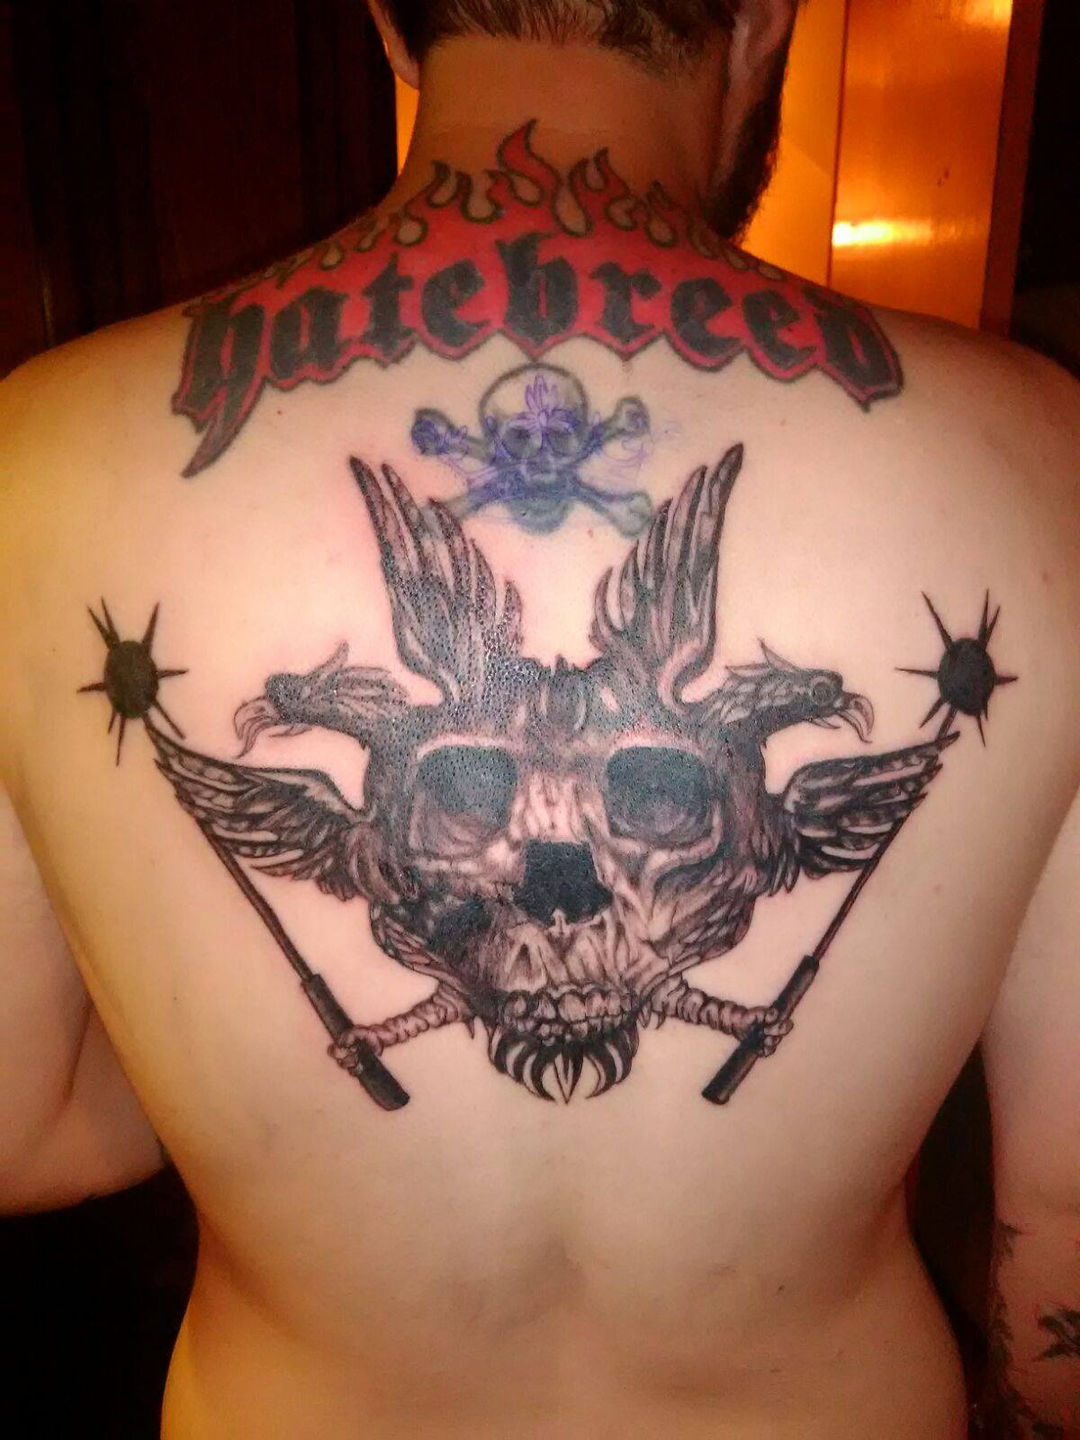 skull and crossbones chest tattoo